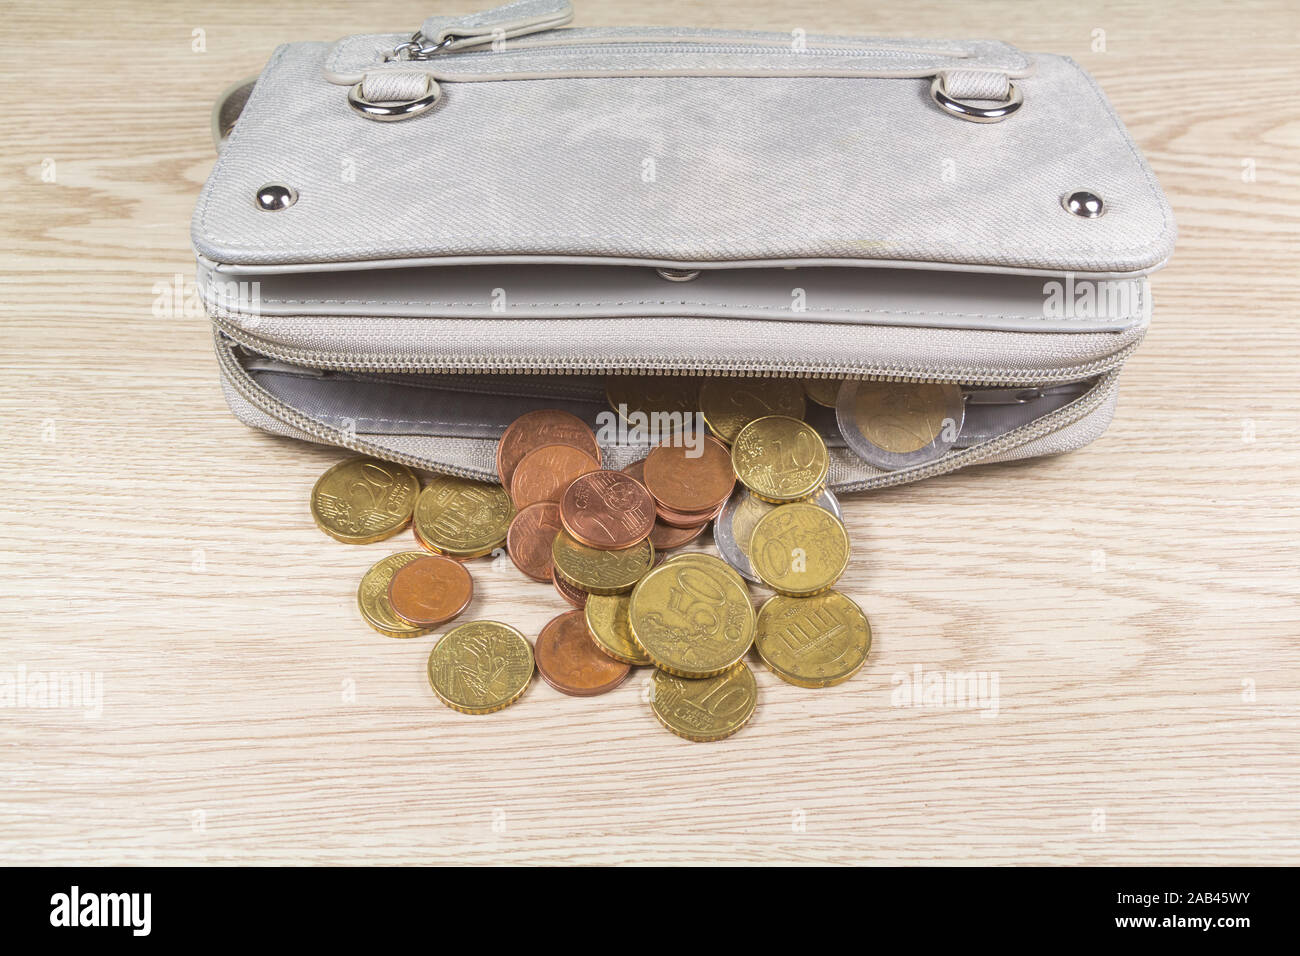 Euros coins take out of a gray purse Stock Photo